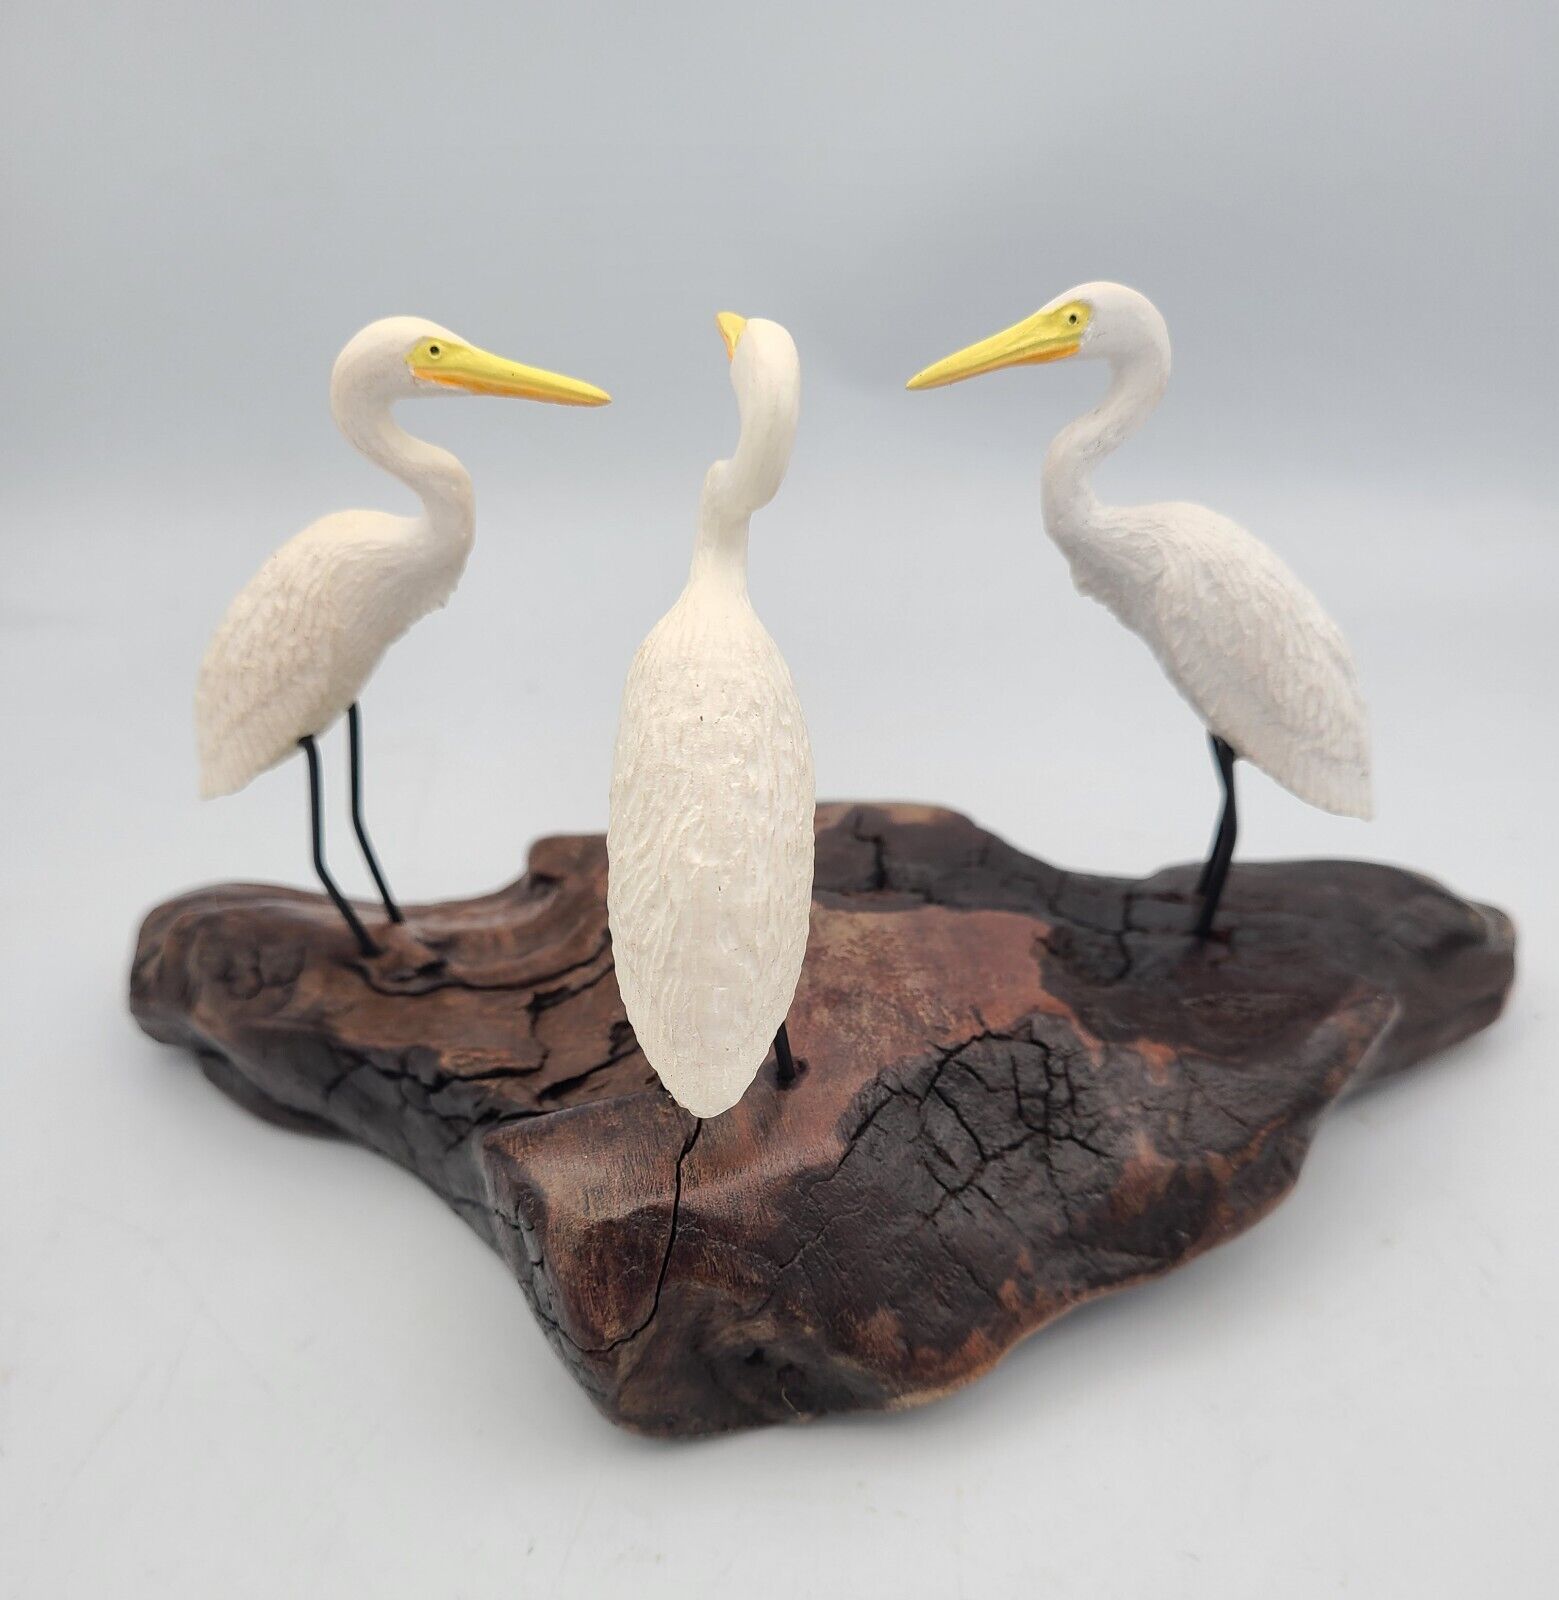 Heron trio by John Perry Sculpture on burlwood base